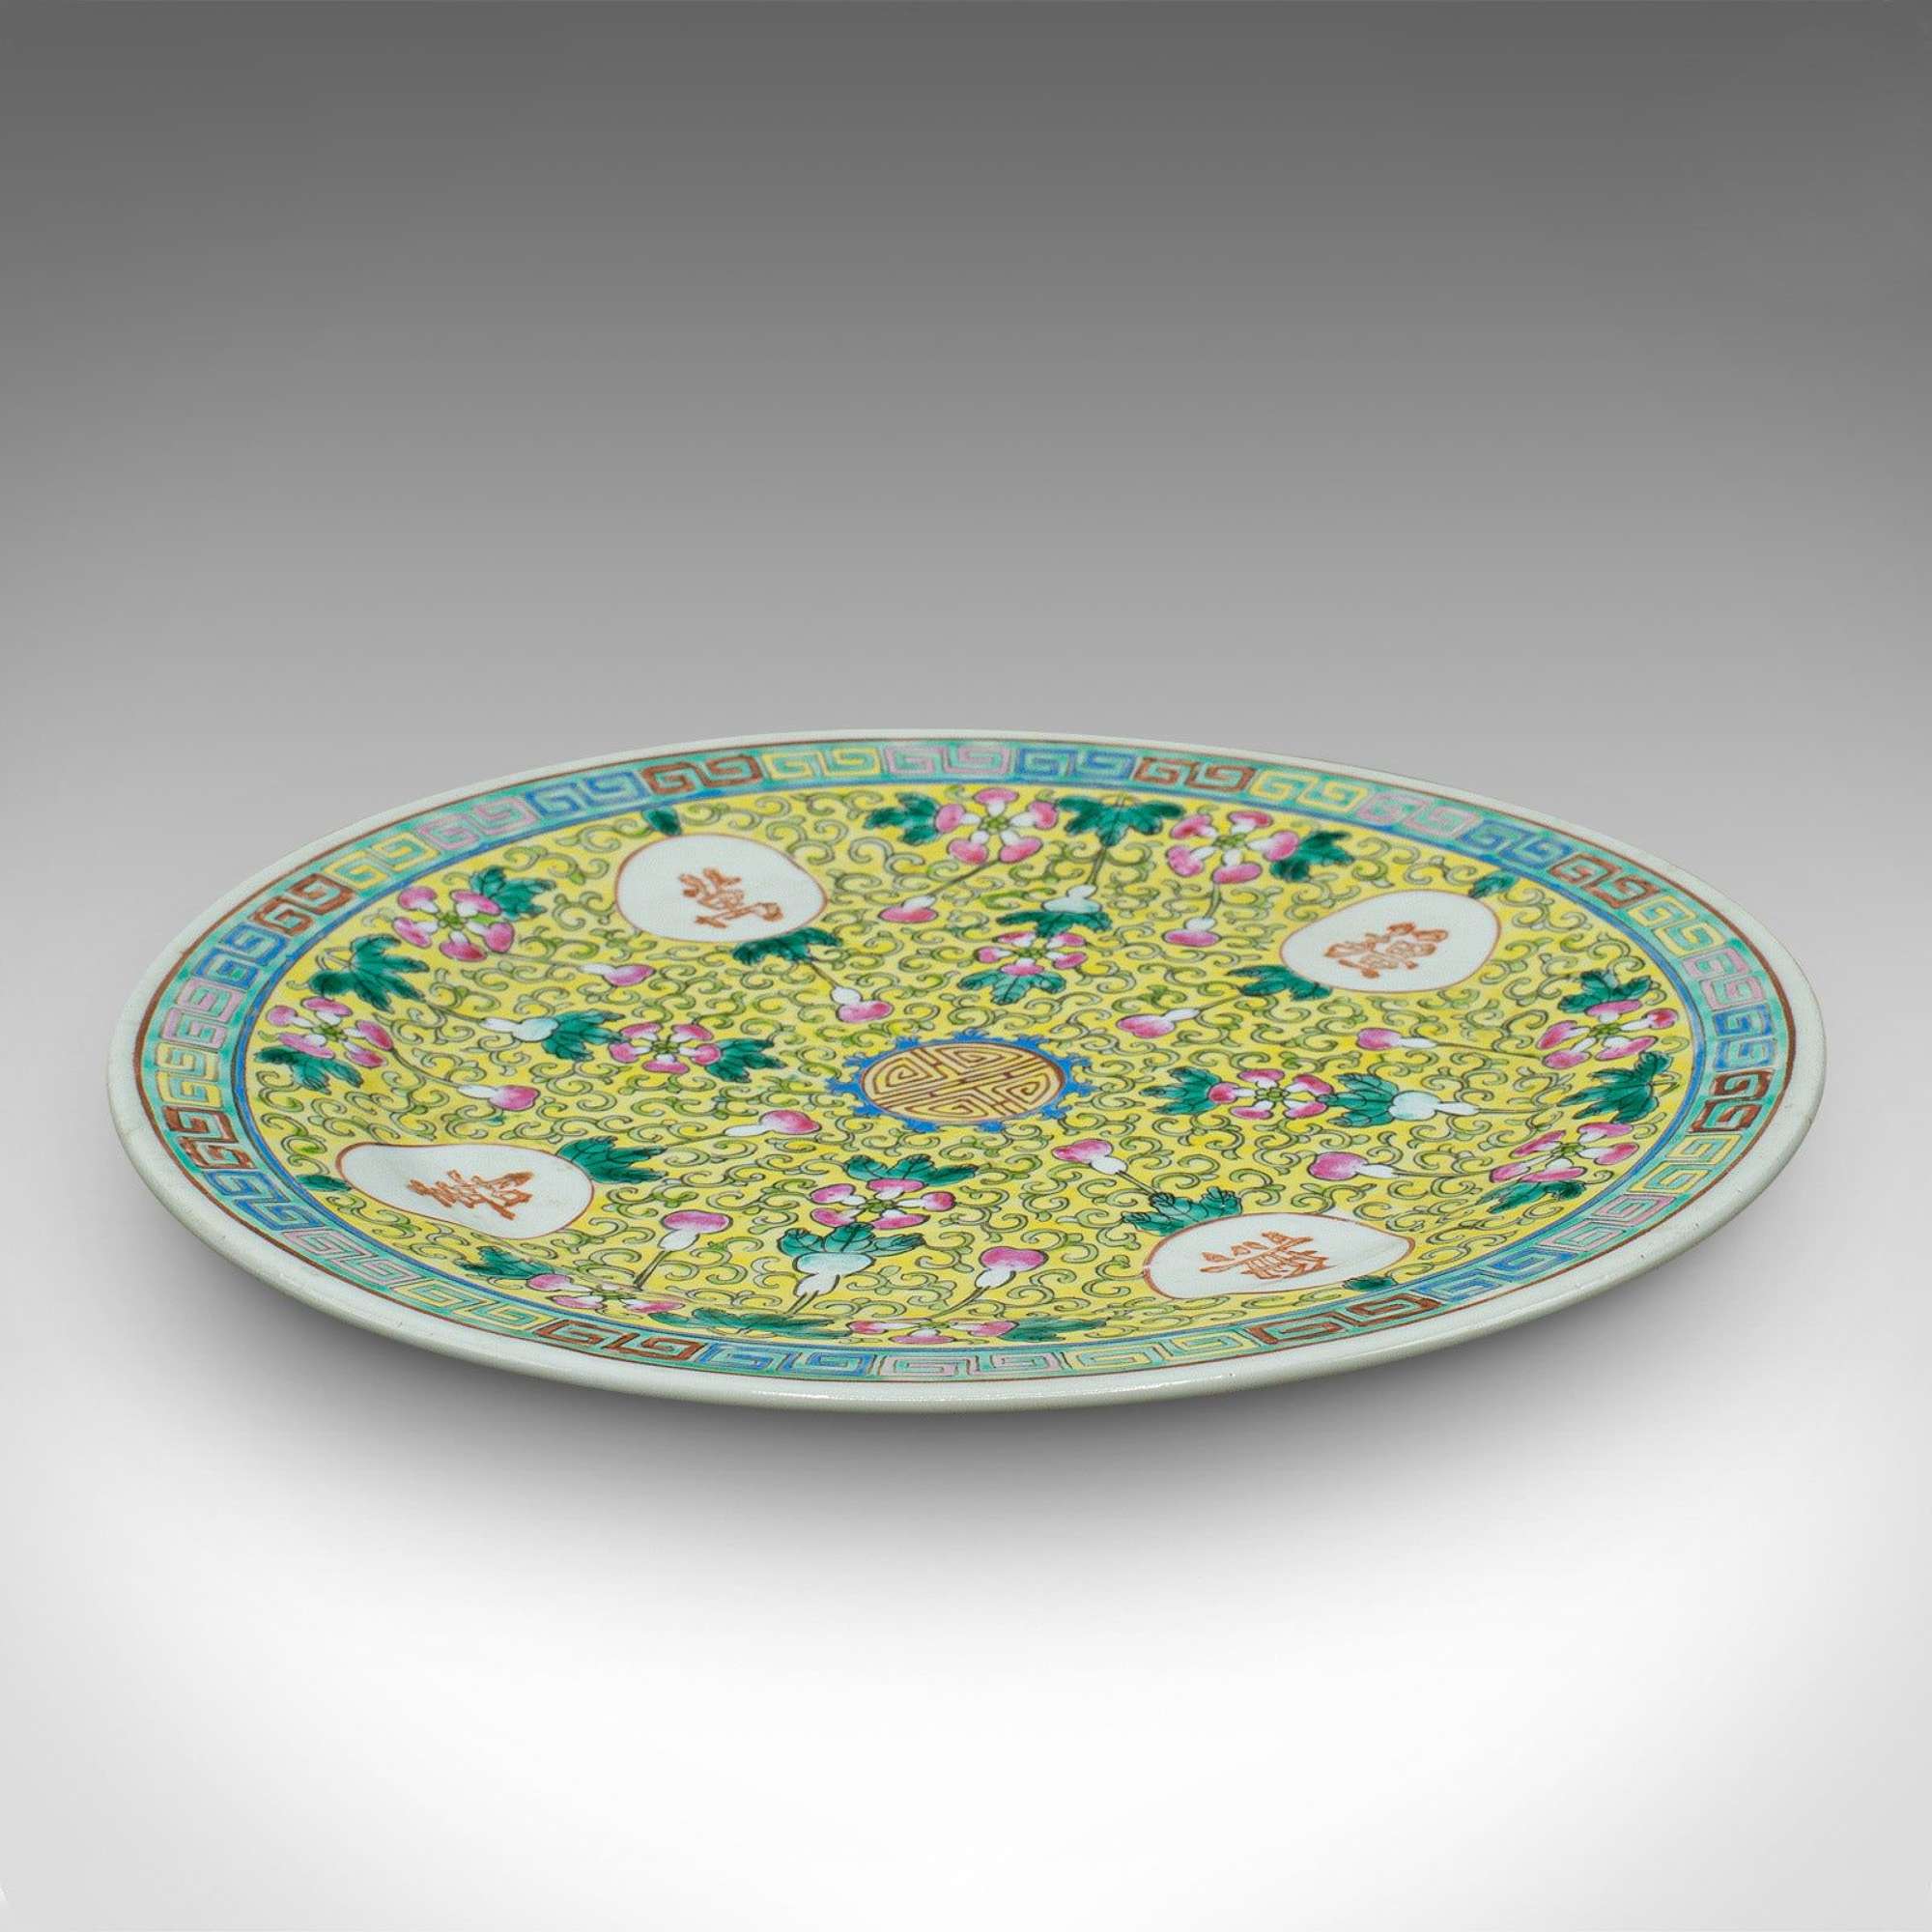 Antique Famille Jaune Decorative Plate, Chinese Ceramic, Display Dish, Victorian